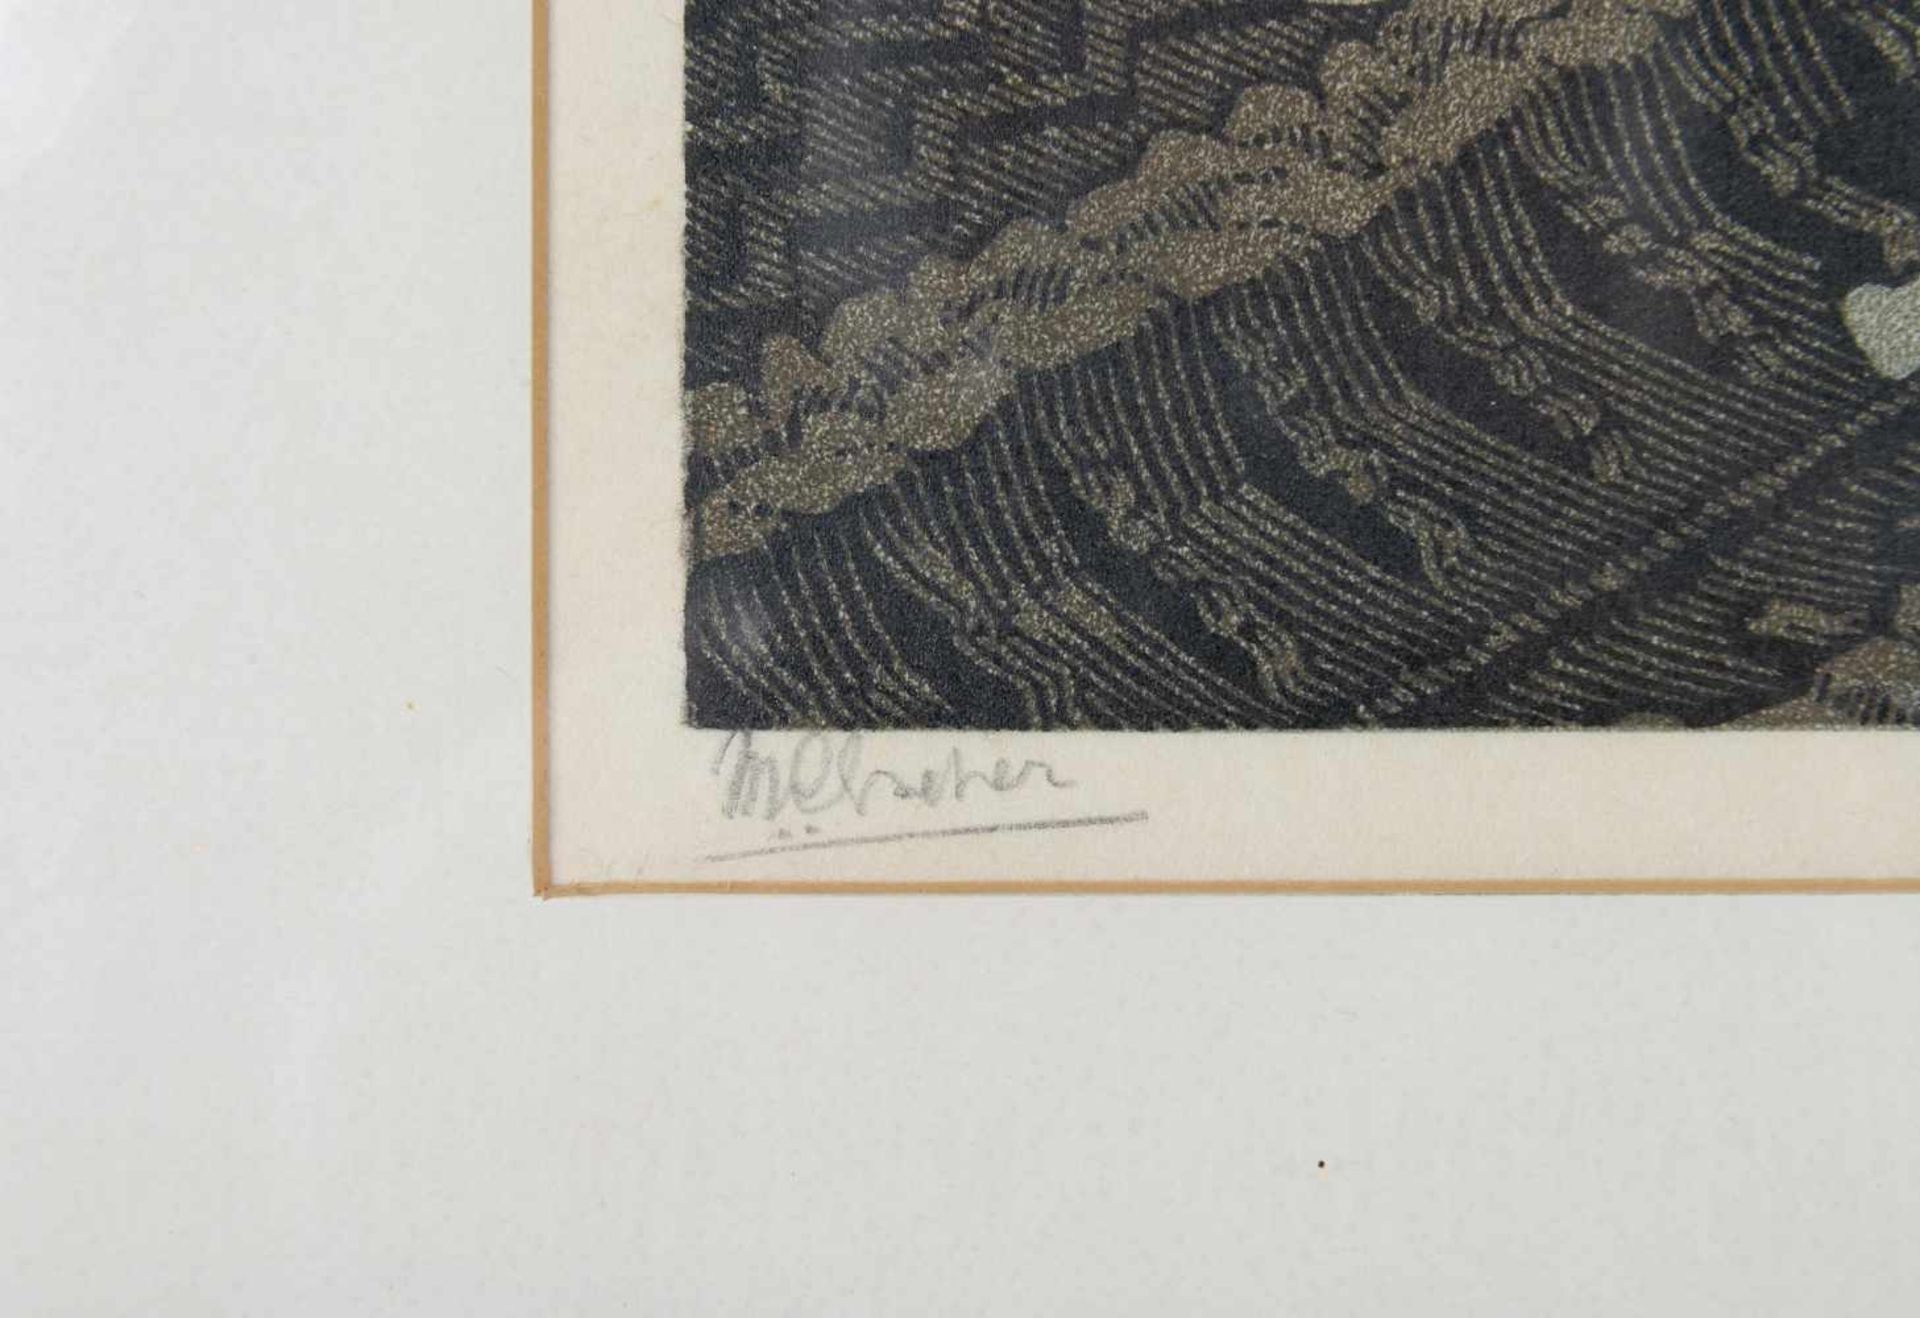 Maurits Cornelis Escher (1898-1972) 'Modderplas', gesigneerd l.o., 'eigen druk' r.o., februari 1952, - Image 3 of 8